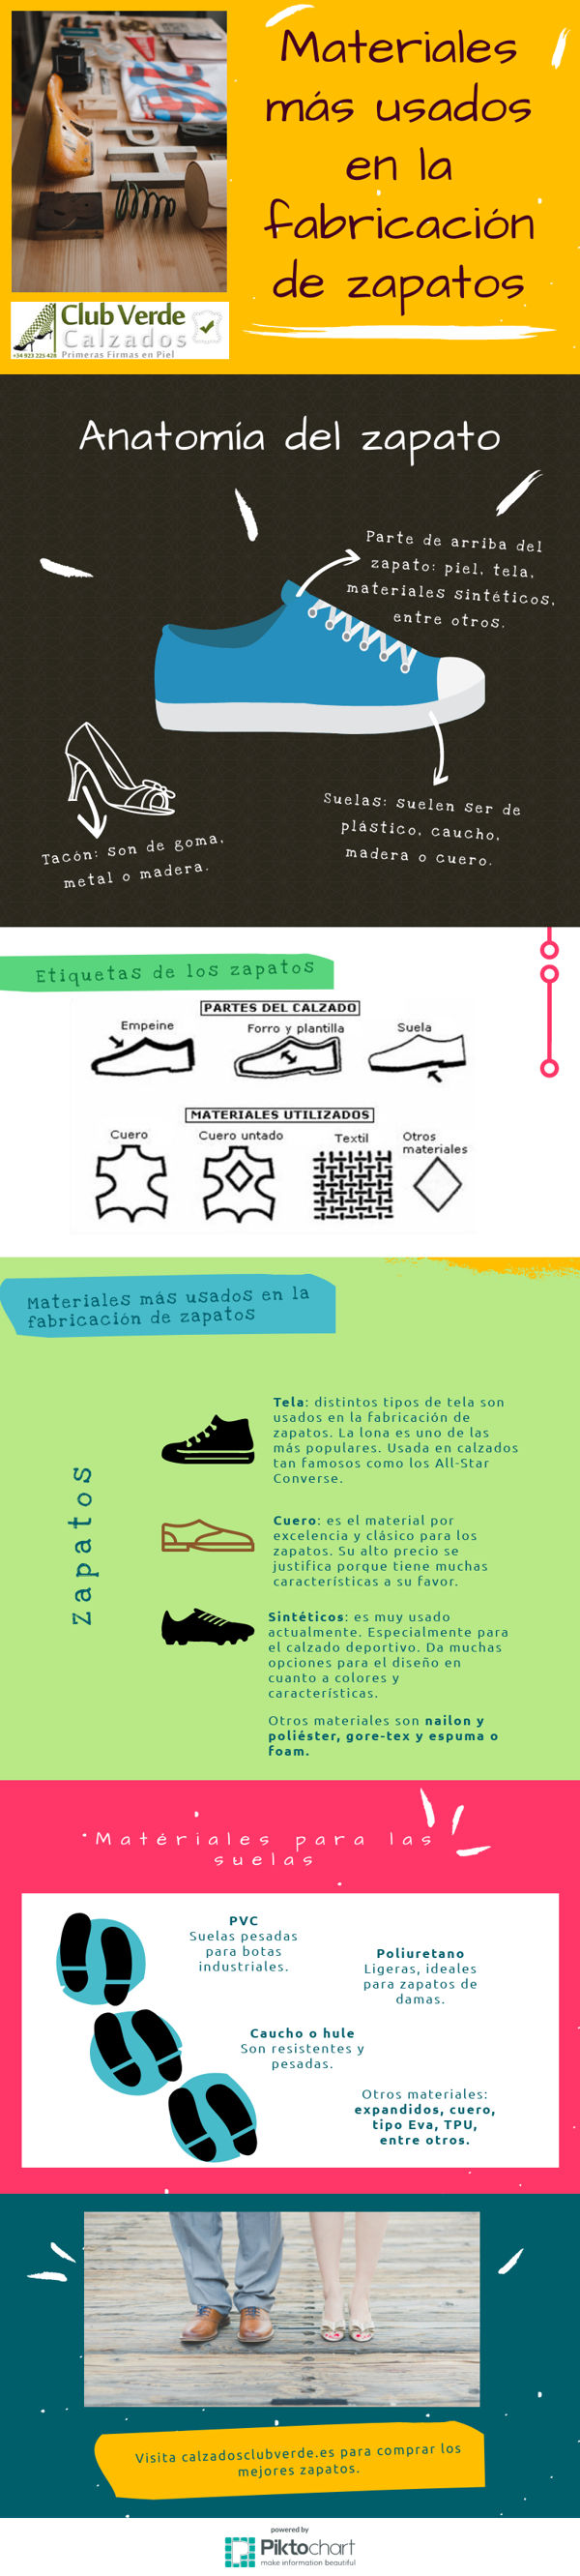 materiales usados fabricacion zapatos